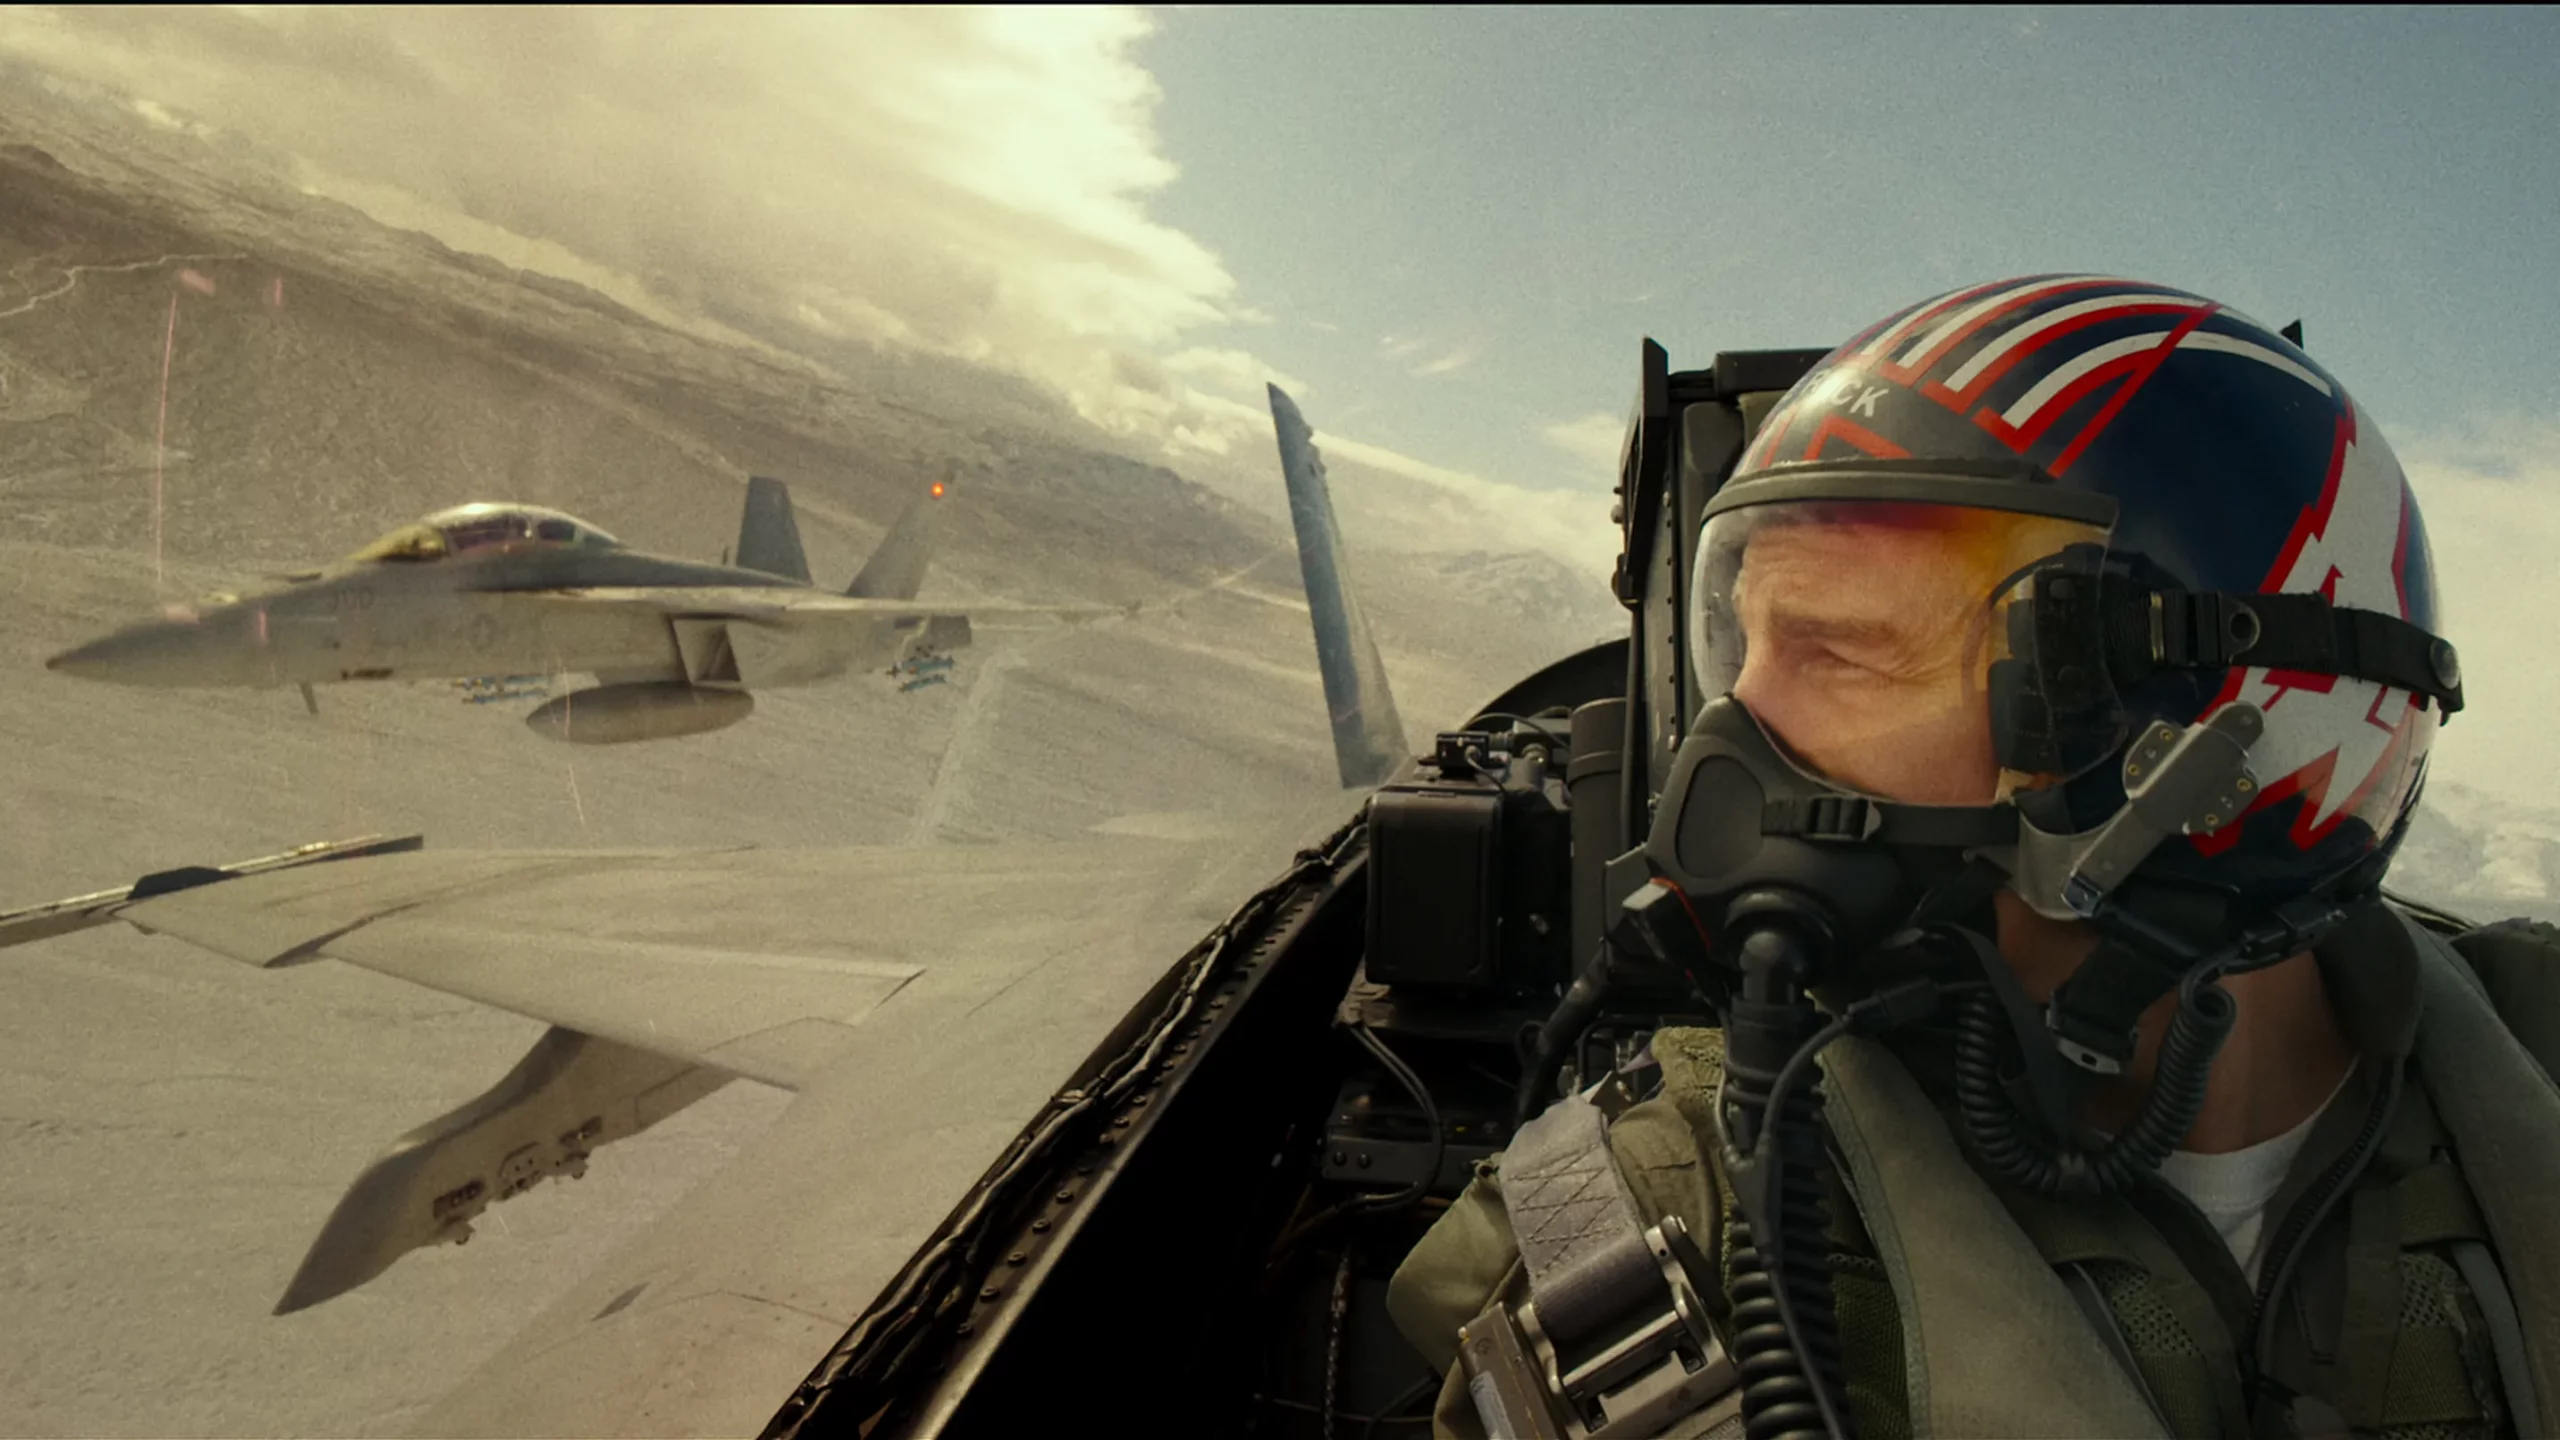 Tom Cruise Takes to the Skies - Pilots 'Top Gun: Maverick' Jet During MTV Movie & TV Awards!